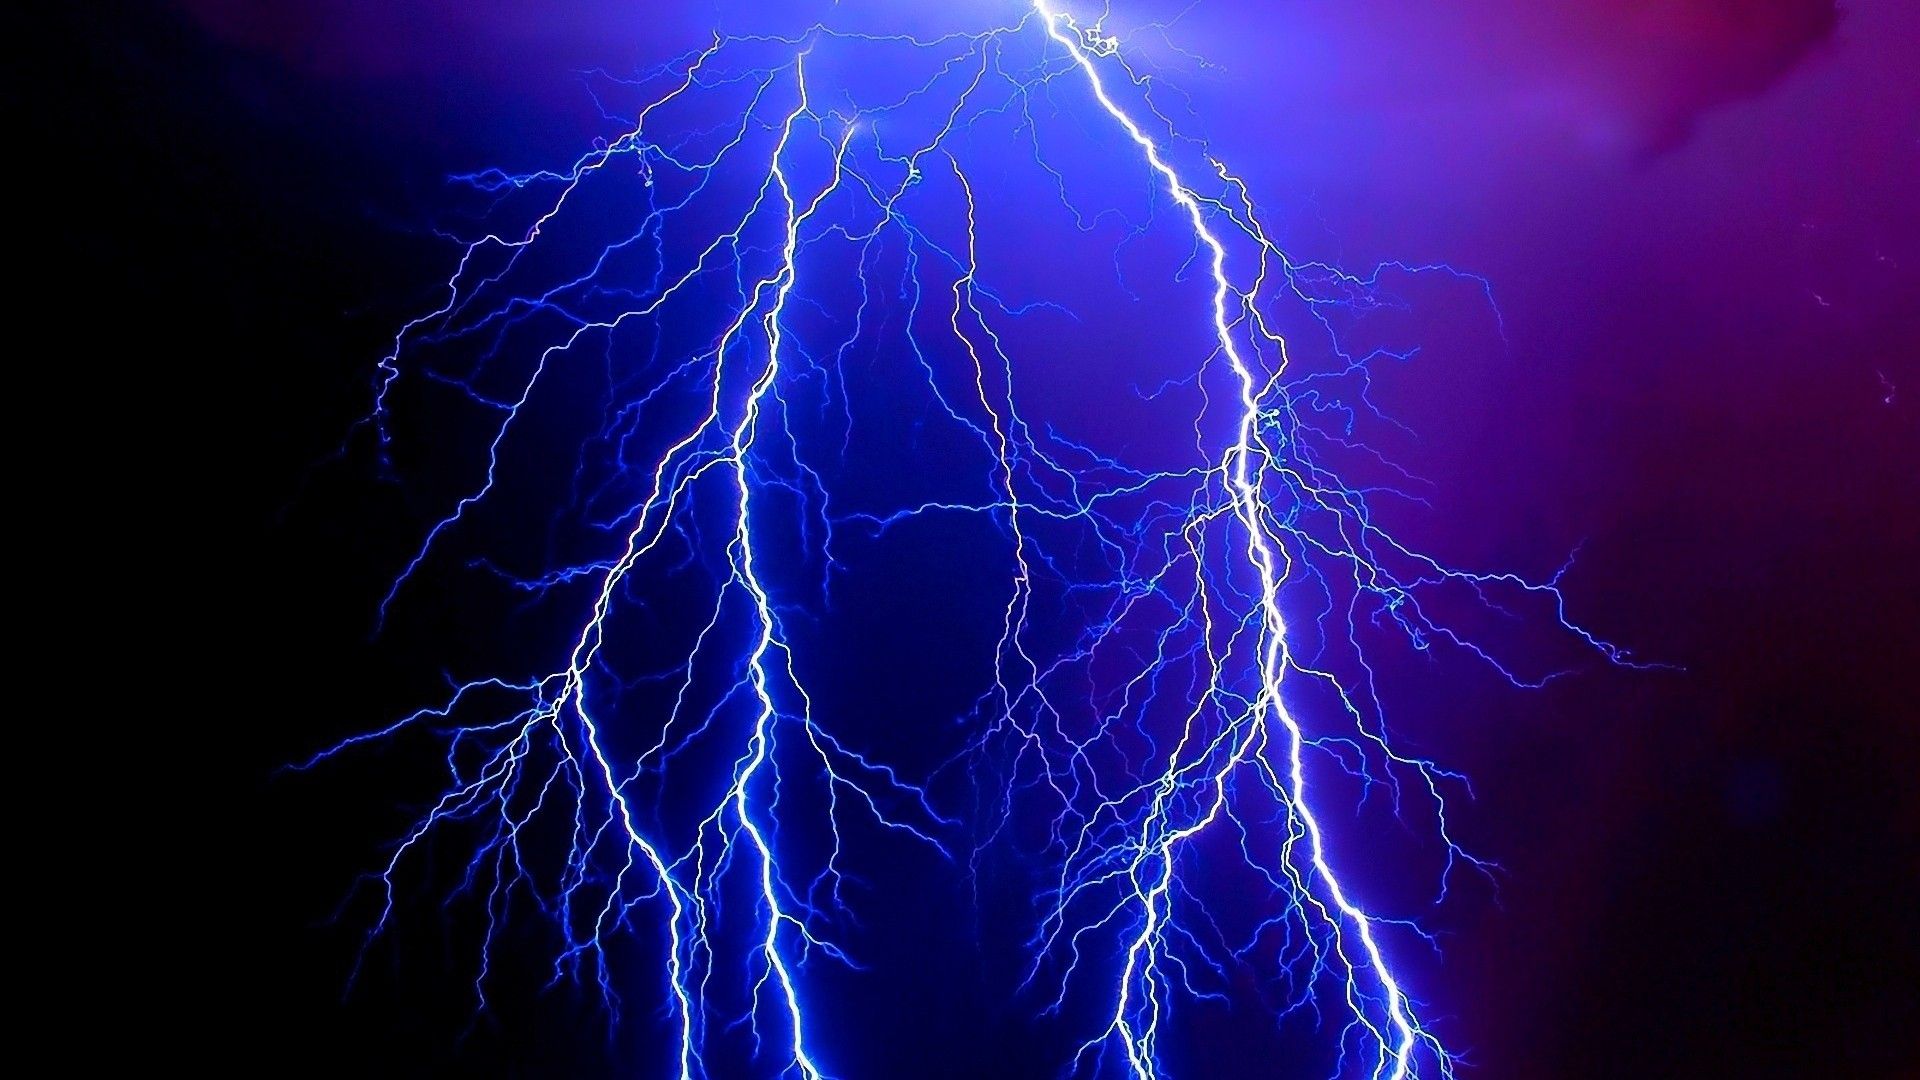 A bolt of lightning in the sky - Lightning